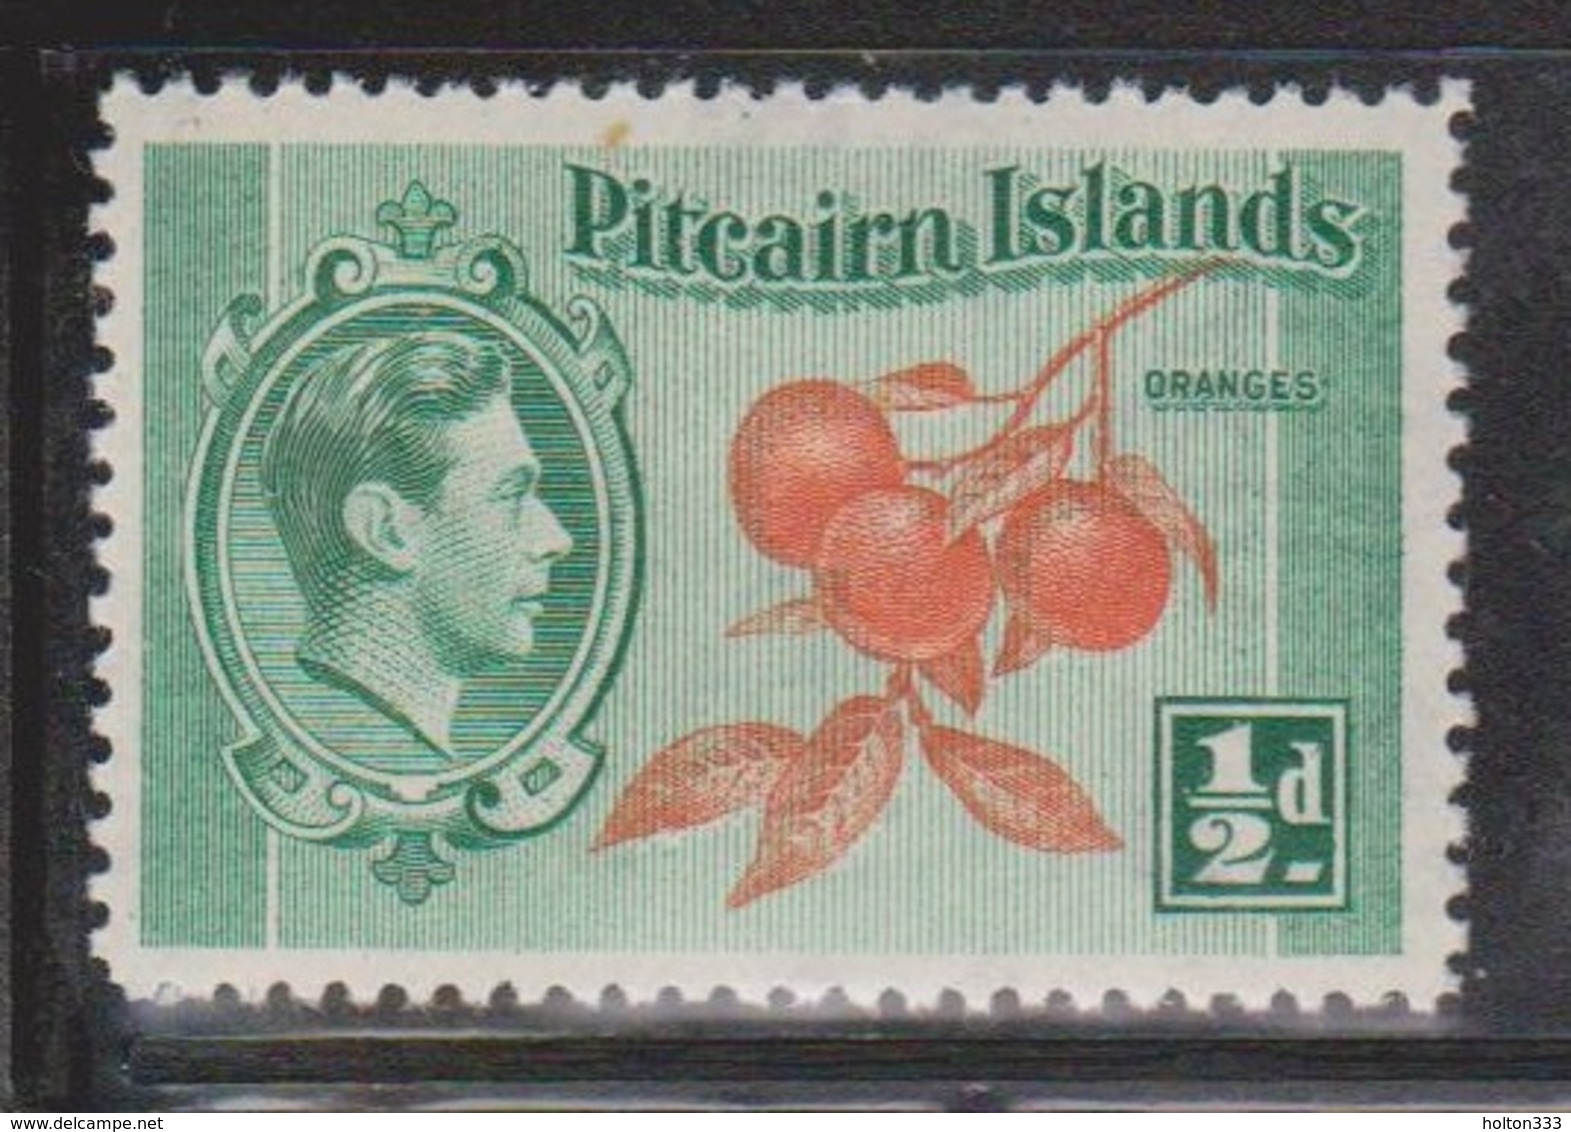 PITCAIRN ISLANDS Scott # 1 MH - KGVI & Oranges - Pitcairn